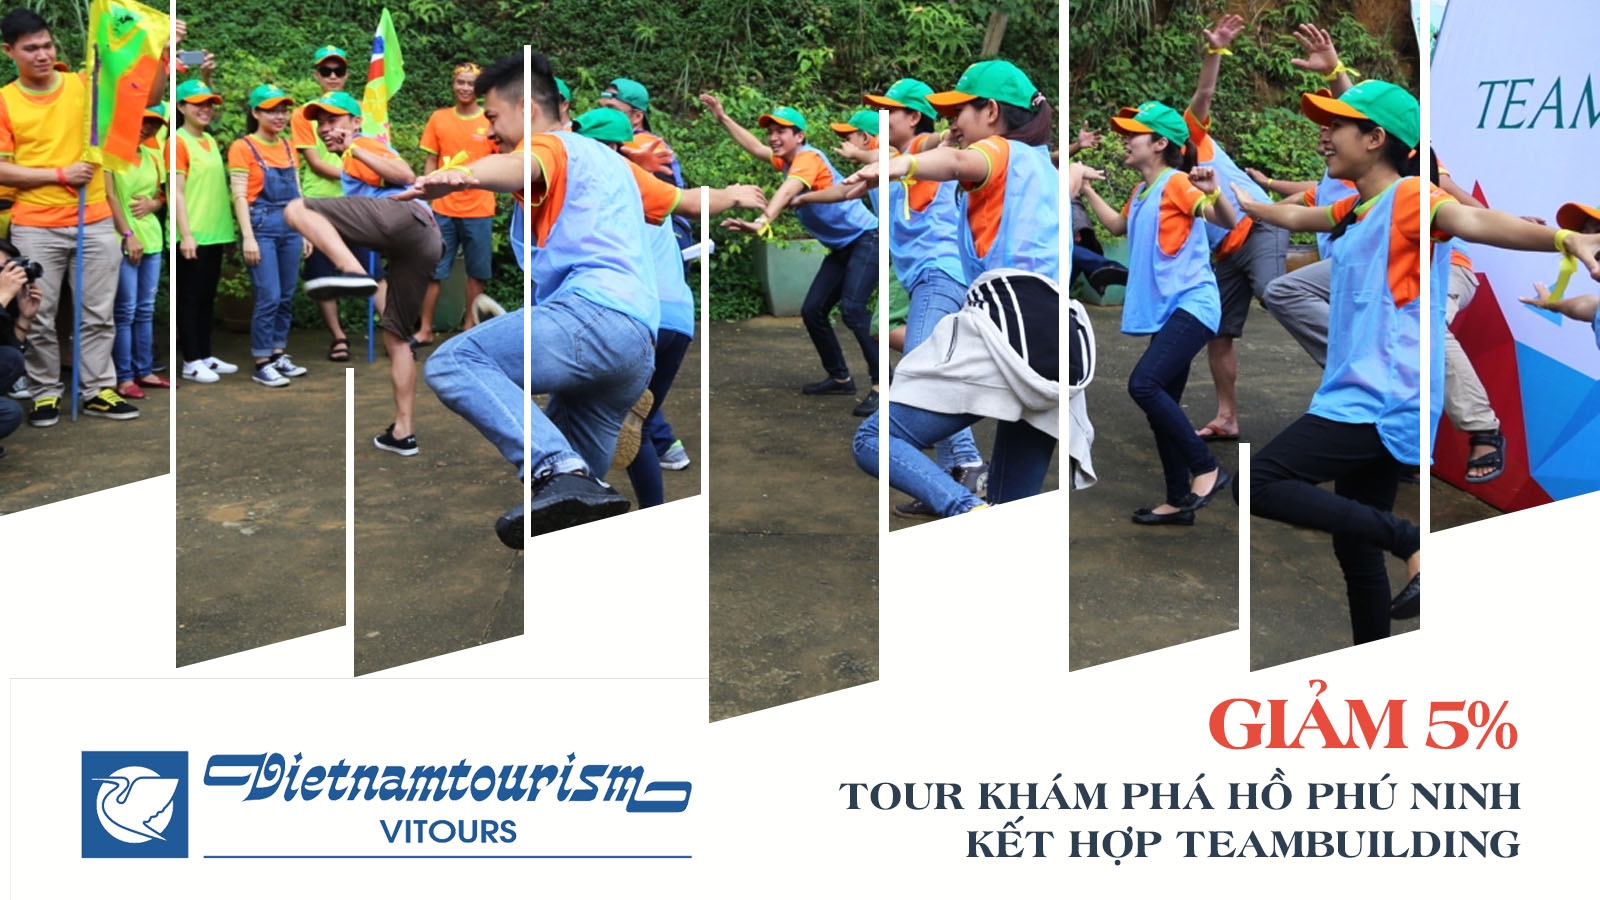 Vitours | Giảm 5% Tour tham quan Hồ Phú Ninh kết hợp team building 1